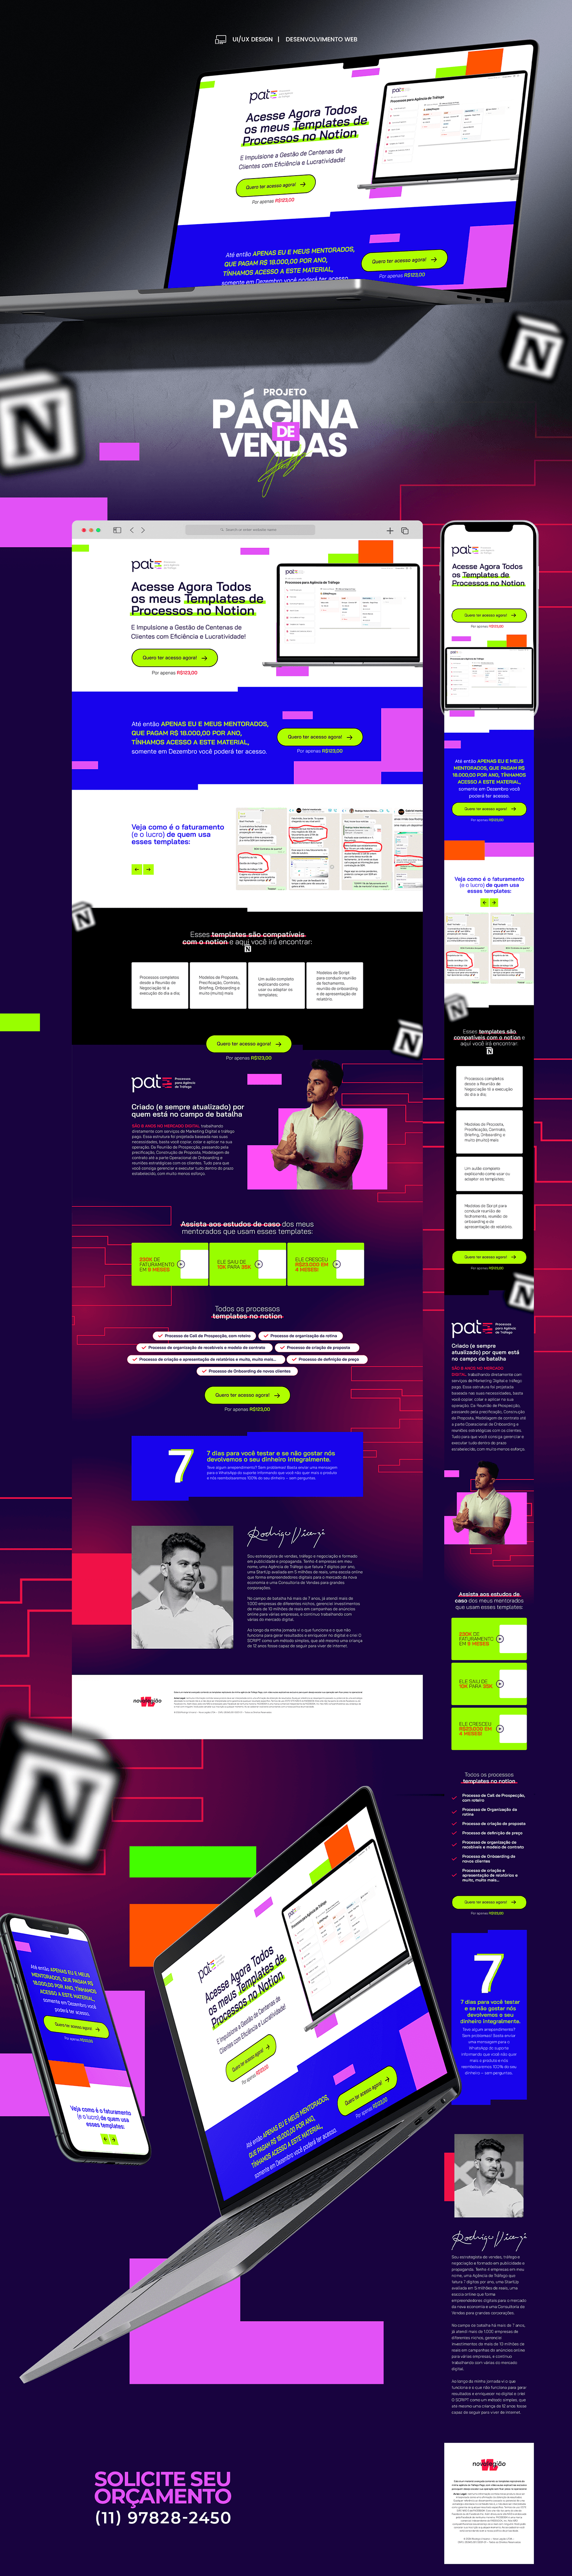 Web Design  lançamento landing page pagina de vendas notion UI/UX Website